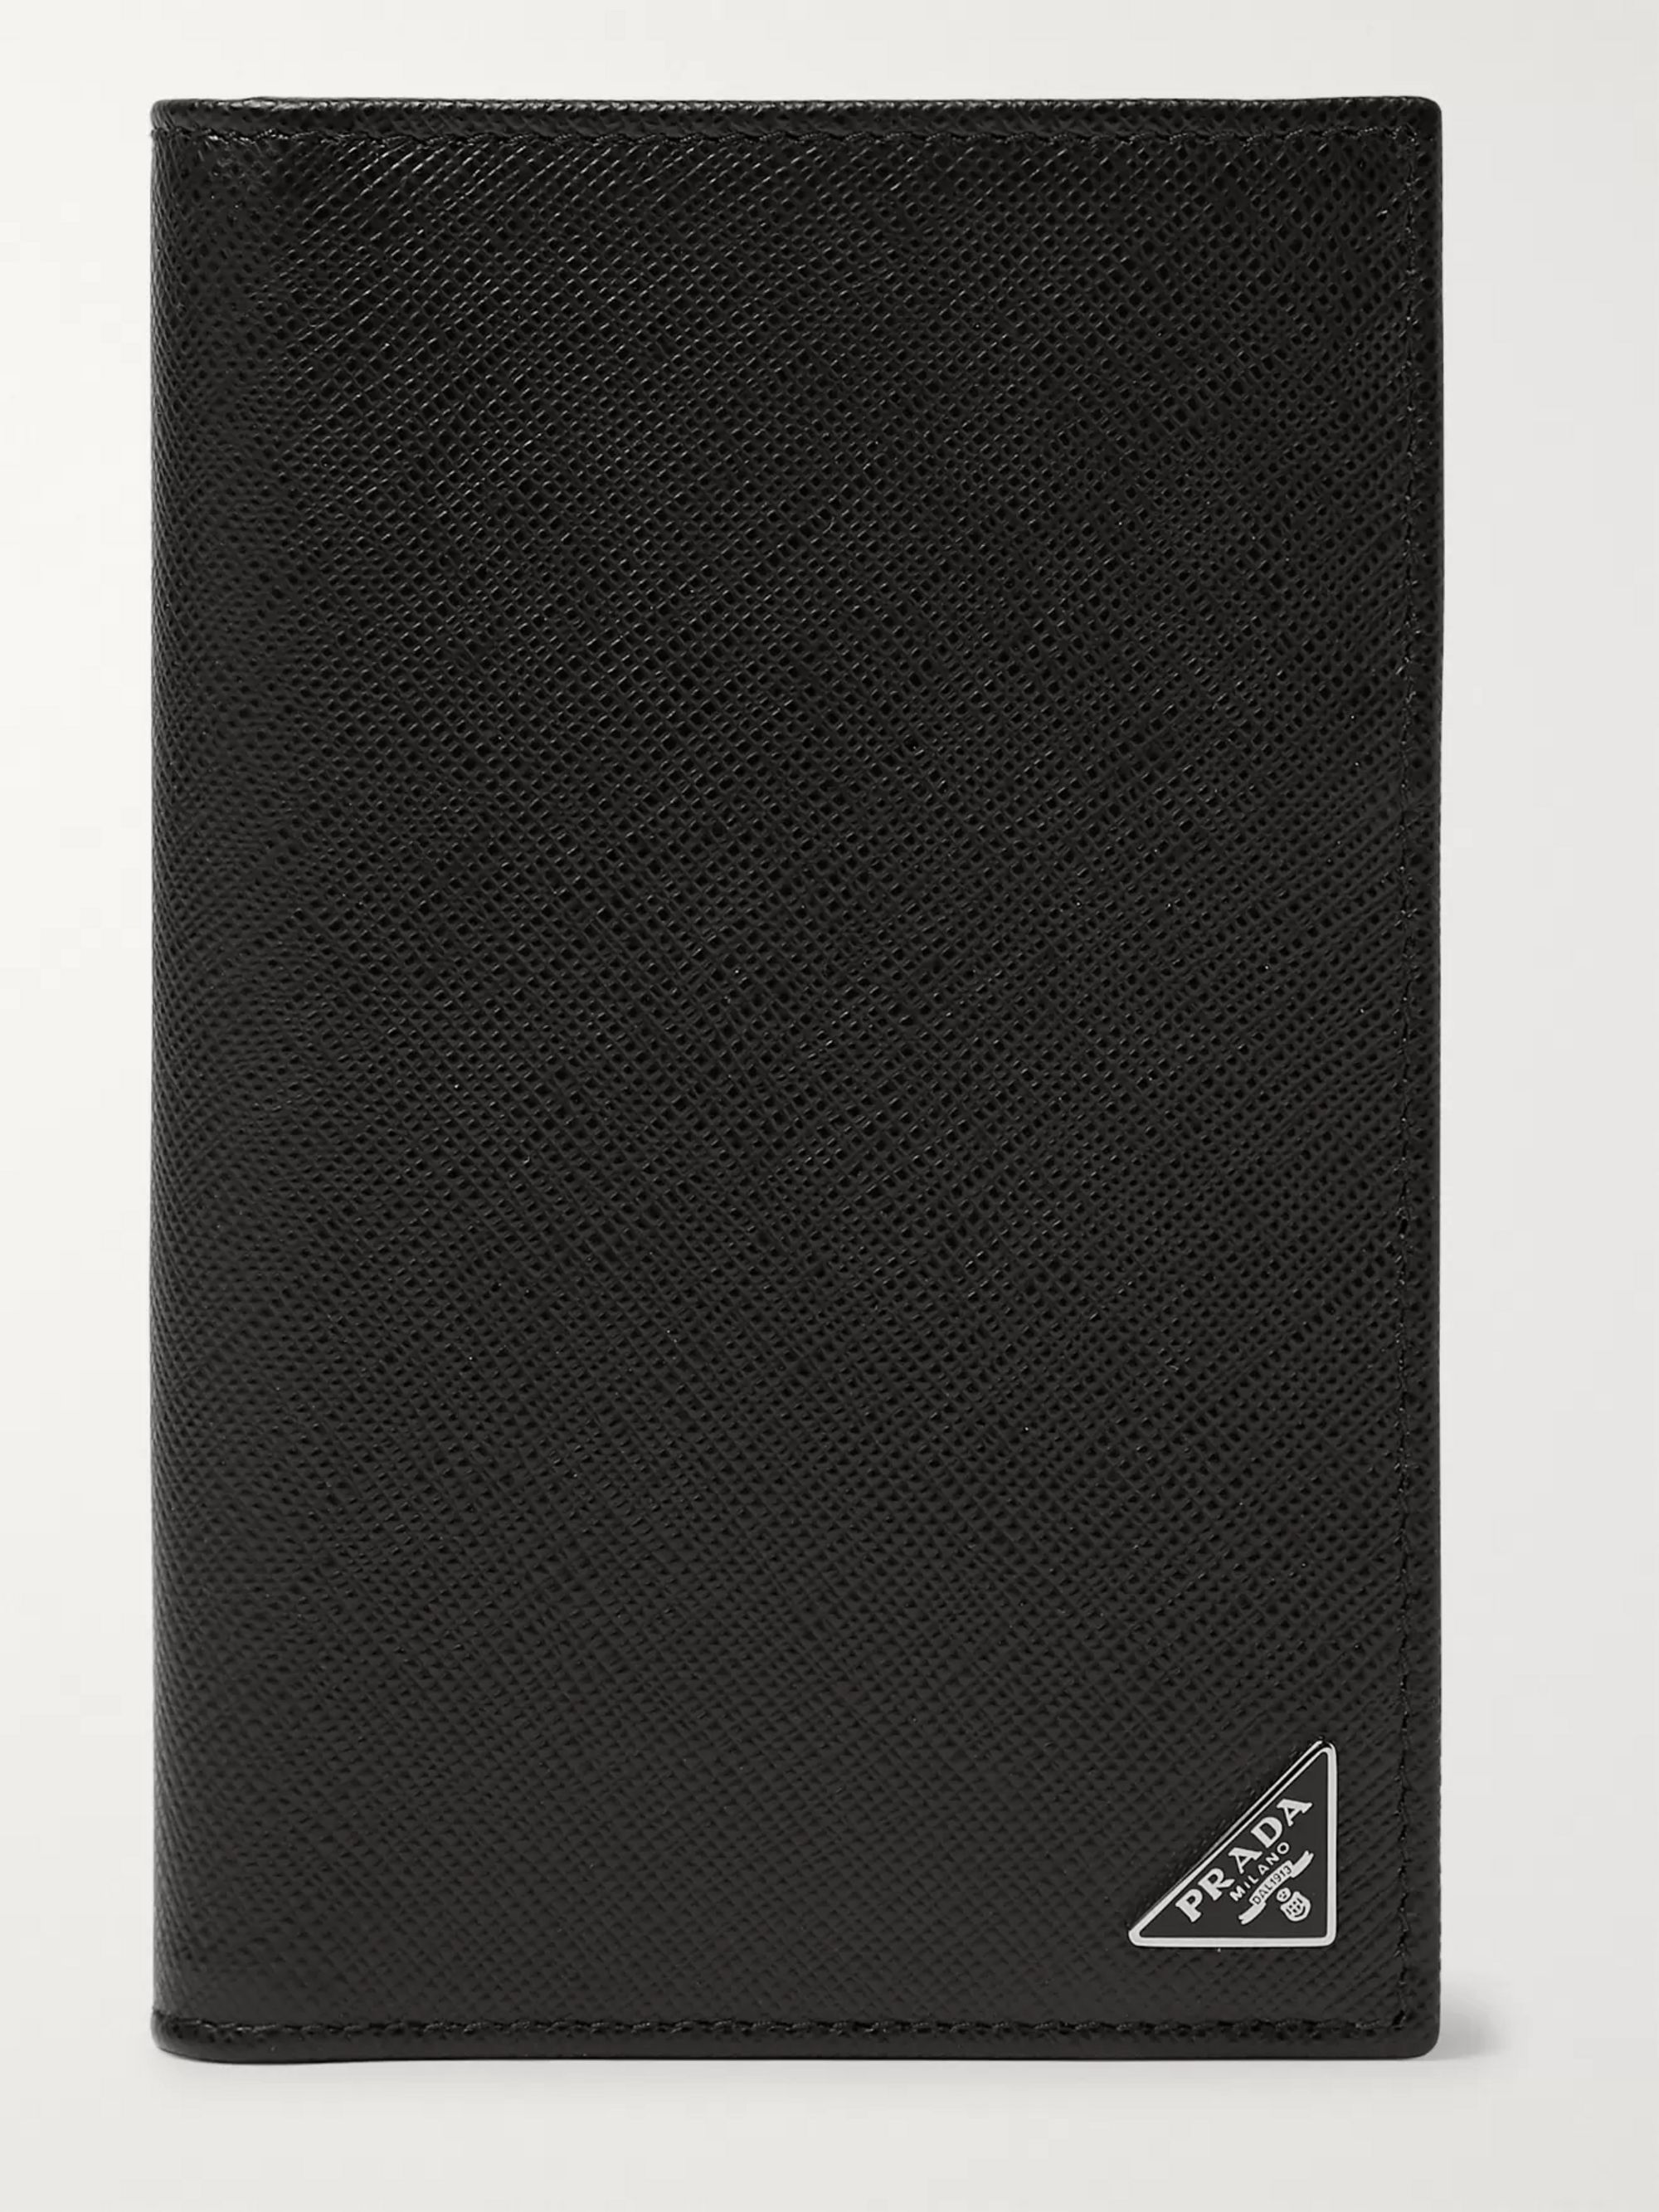 Black Saffiano Leather Passport Cover | Prada | MR PORTER